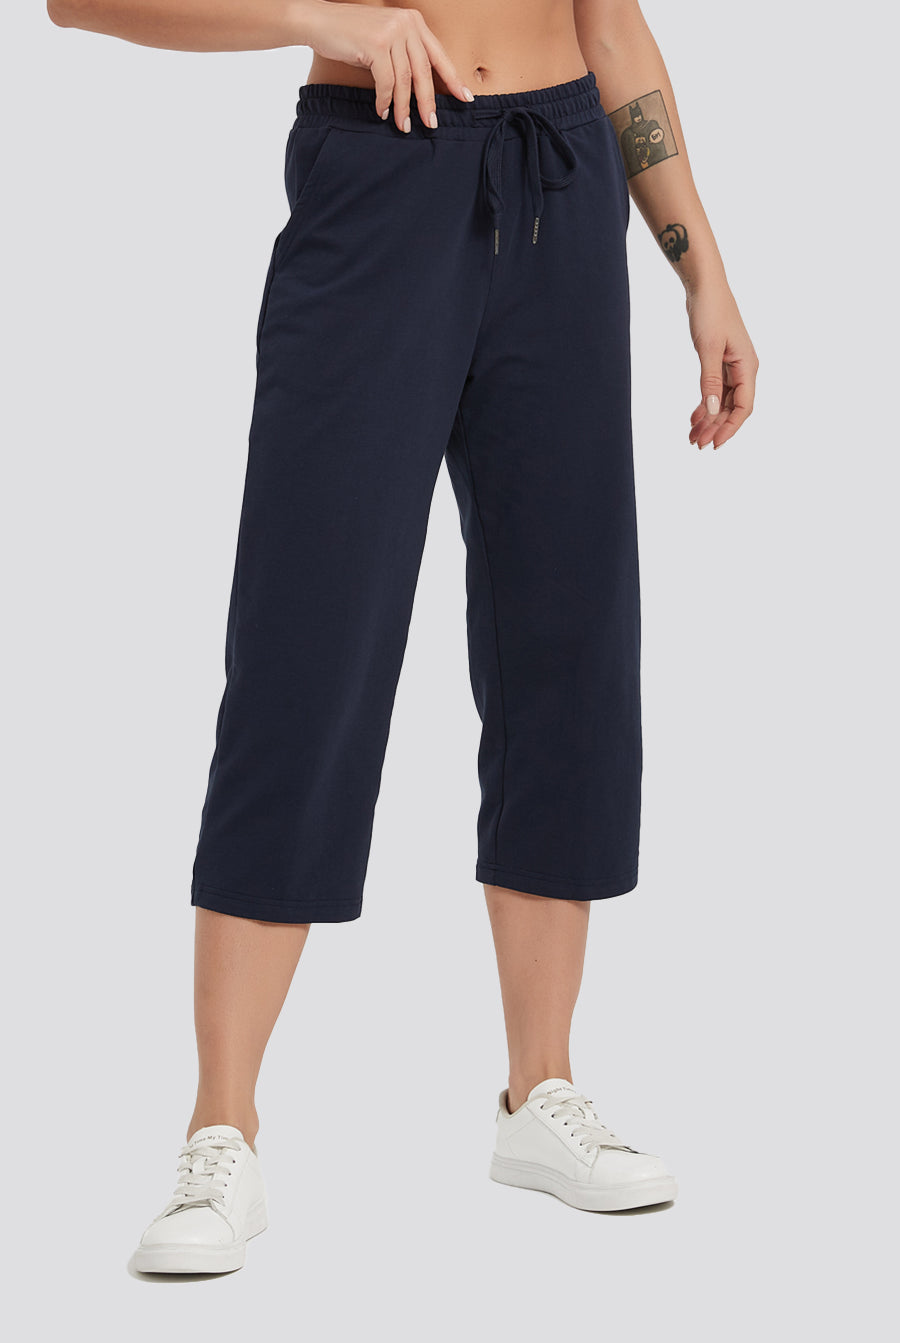 capri pants for women navy front view